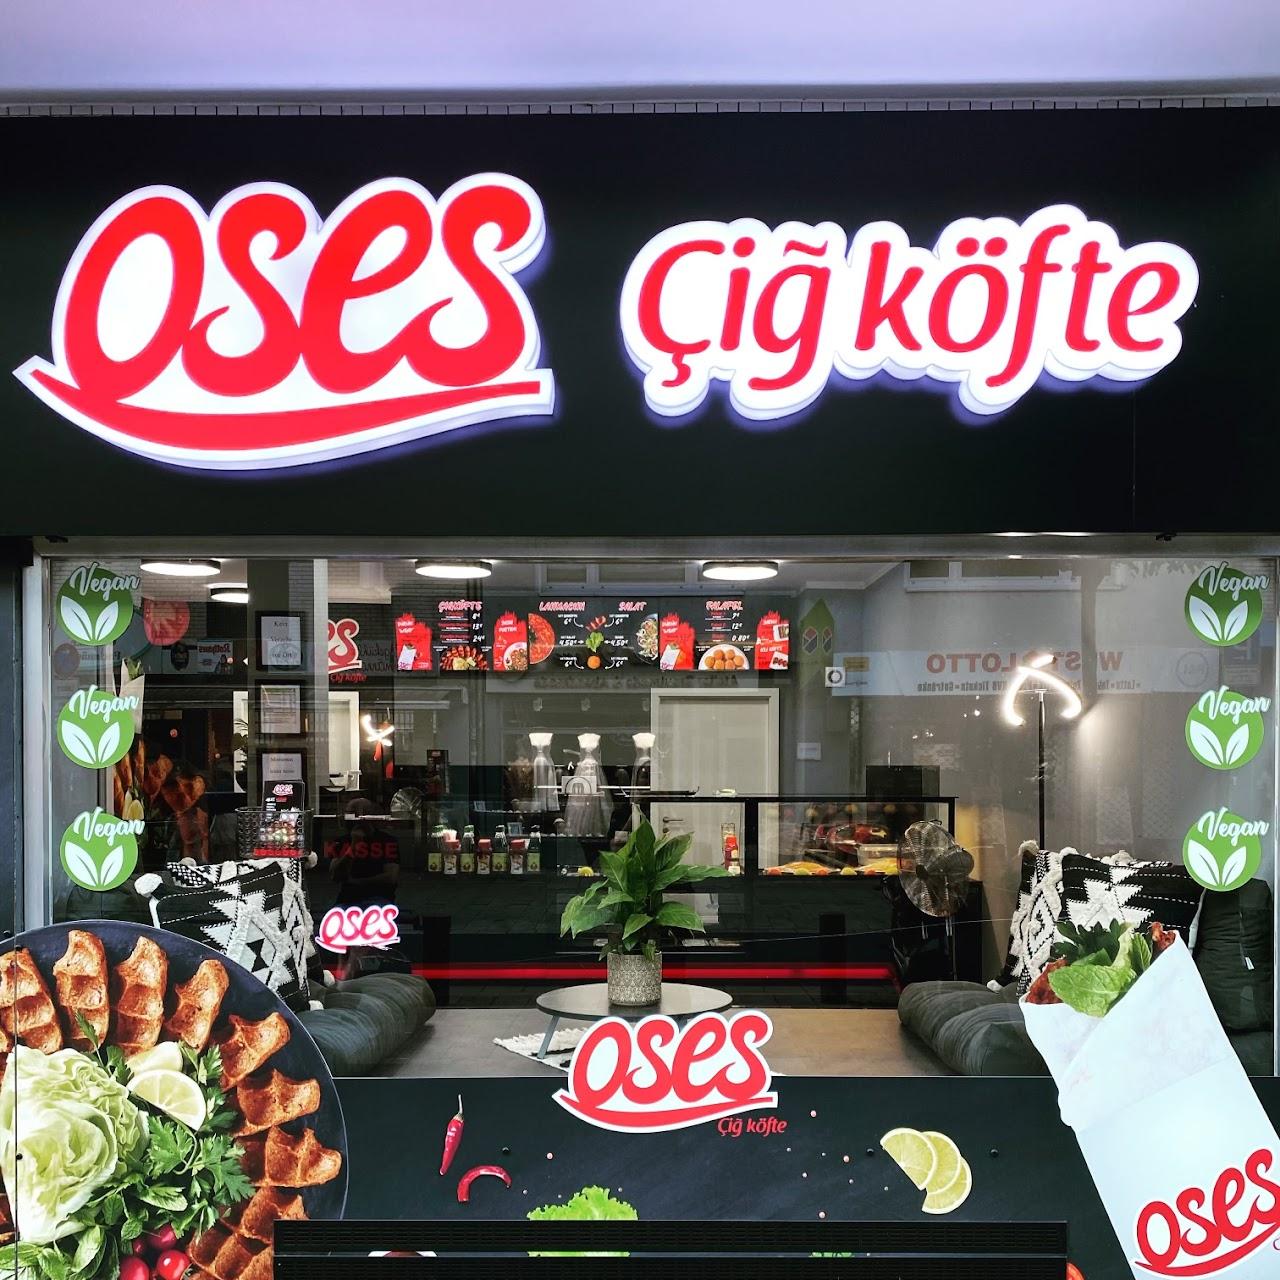 Restaurant "Oses Cigköfte" in Köln